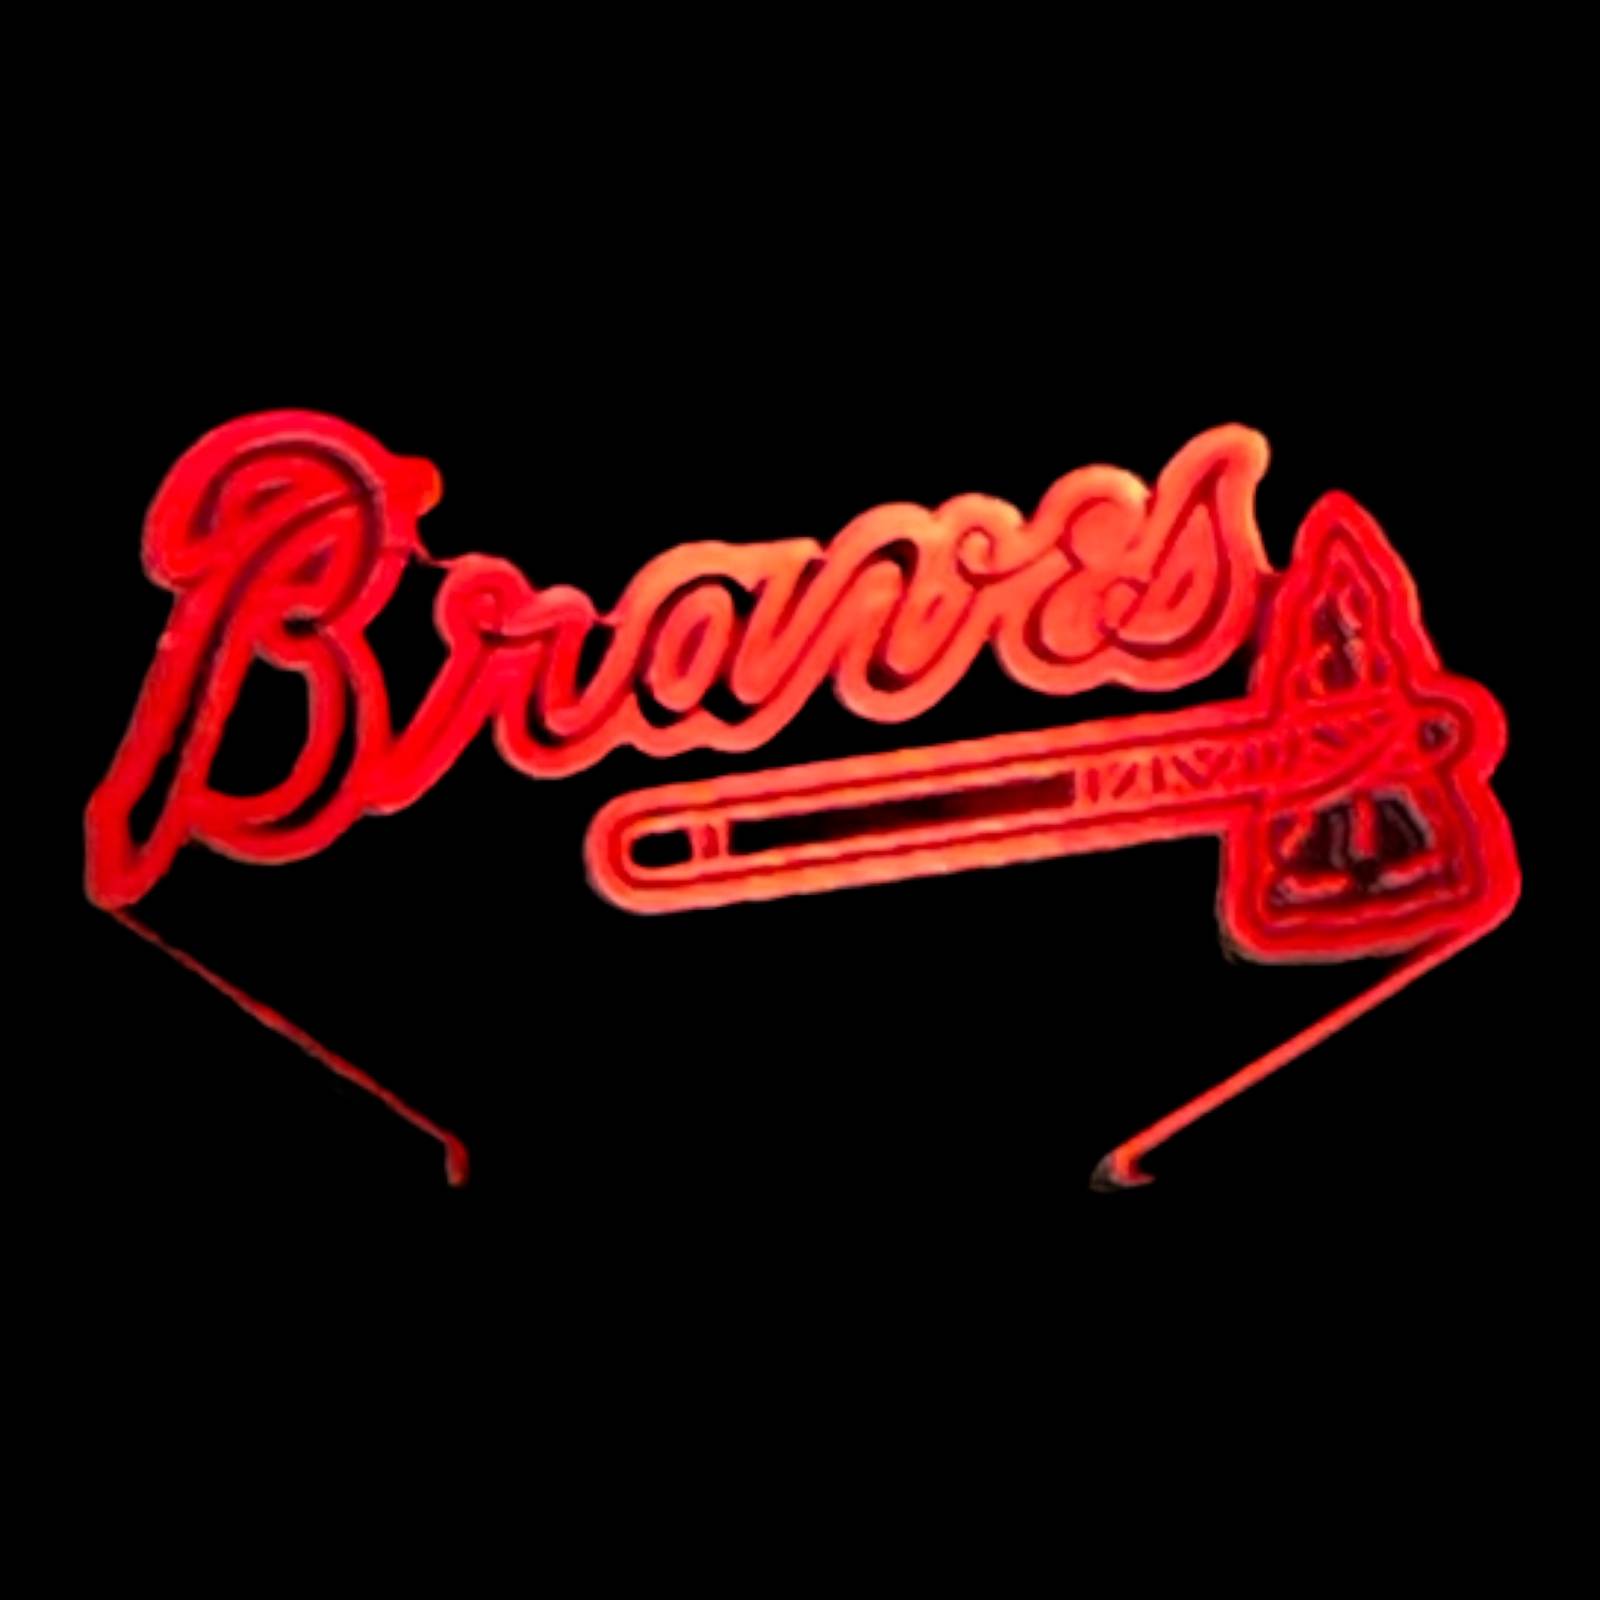 Atlanta Braves 29.75'' x 11.5'' 3D Artwork Sign - Red